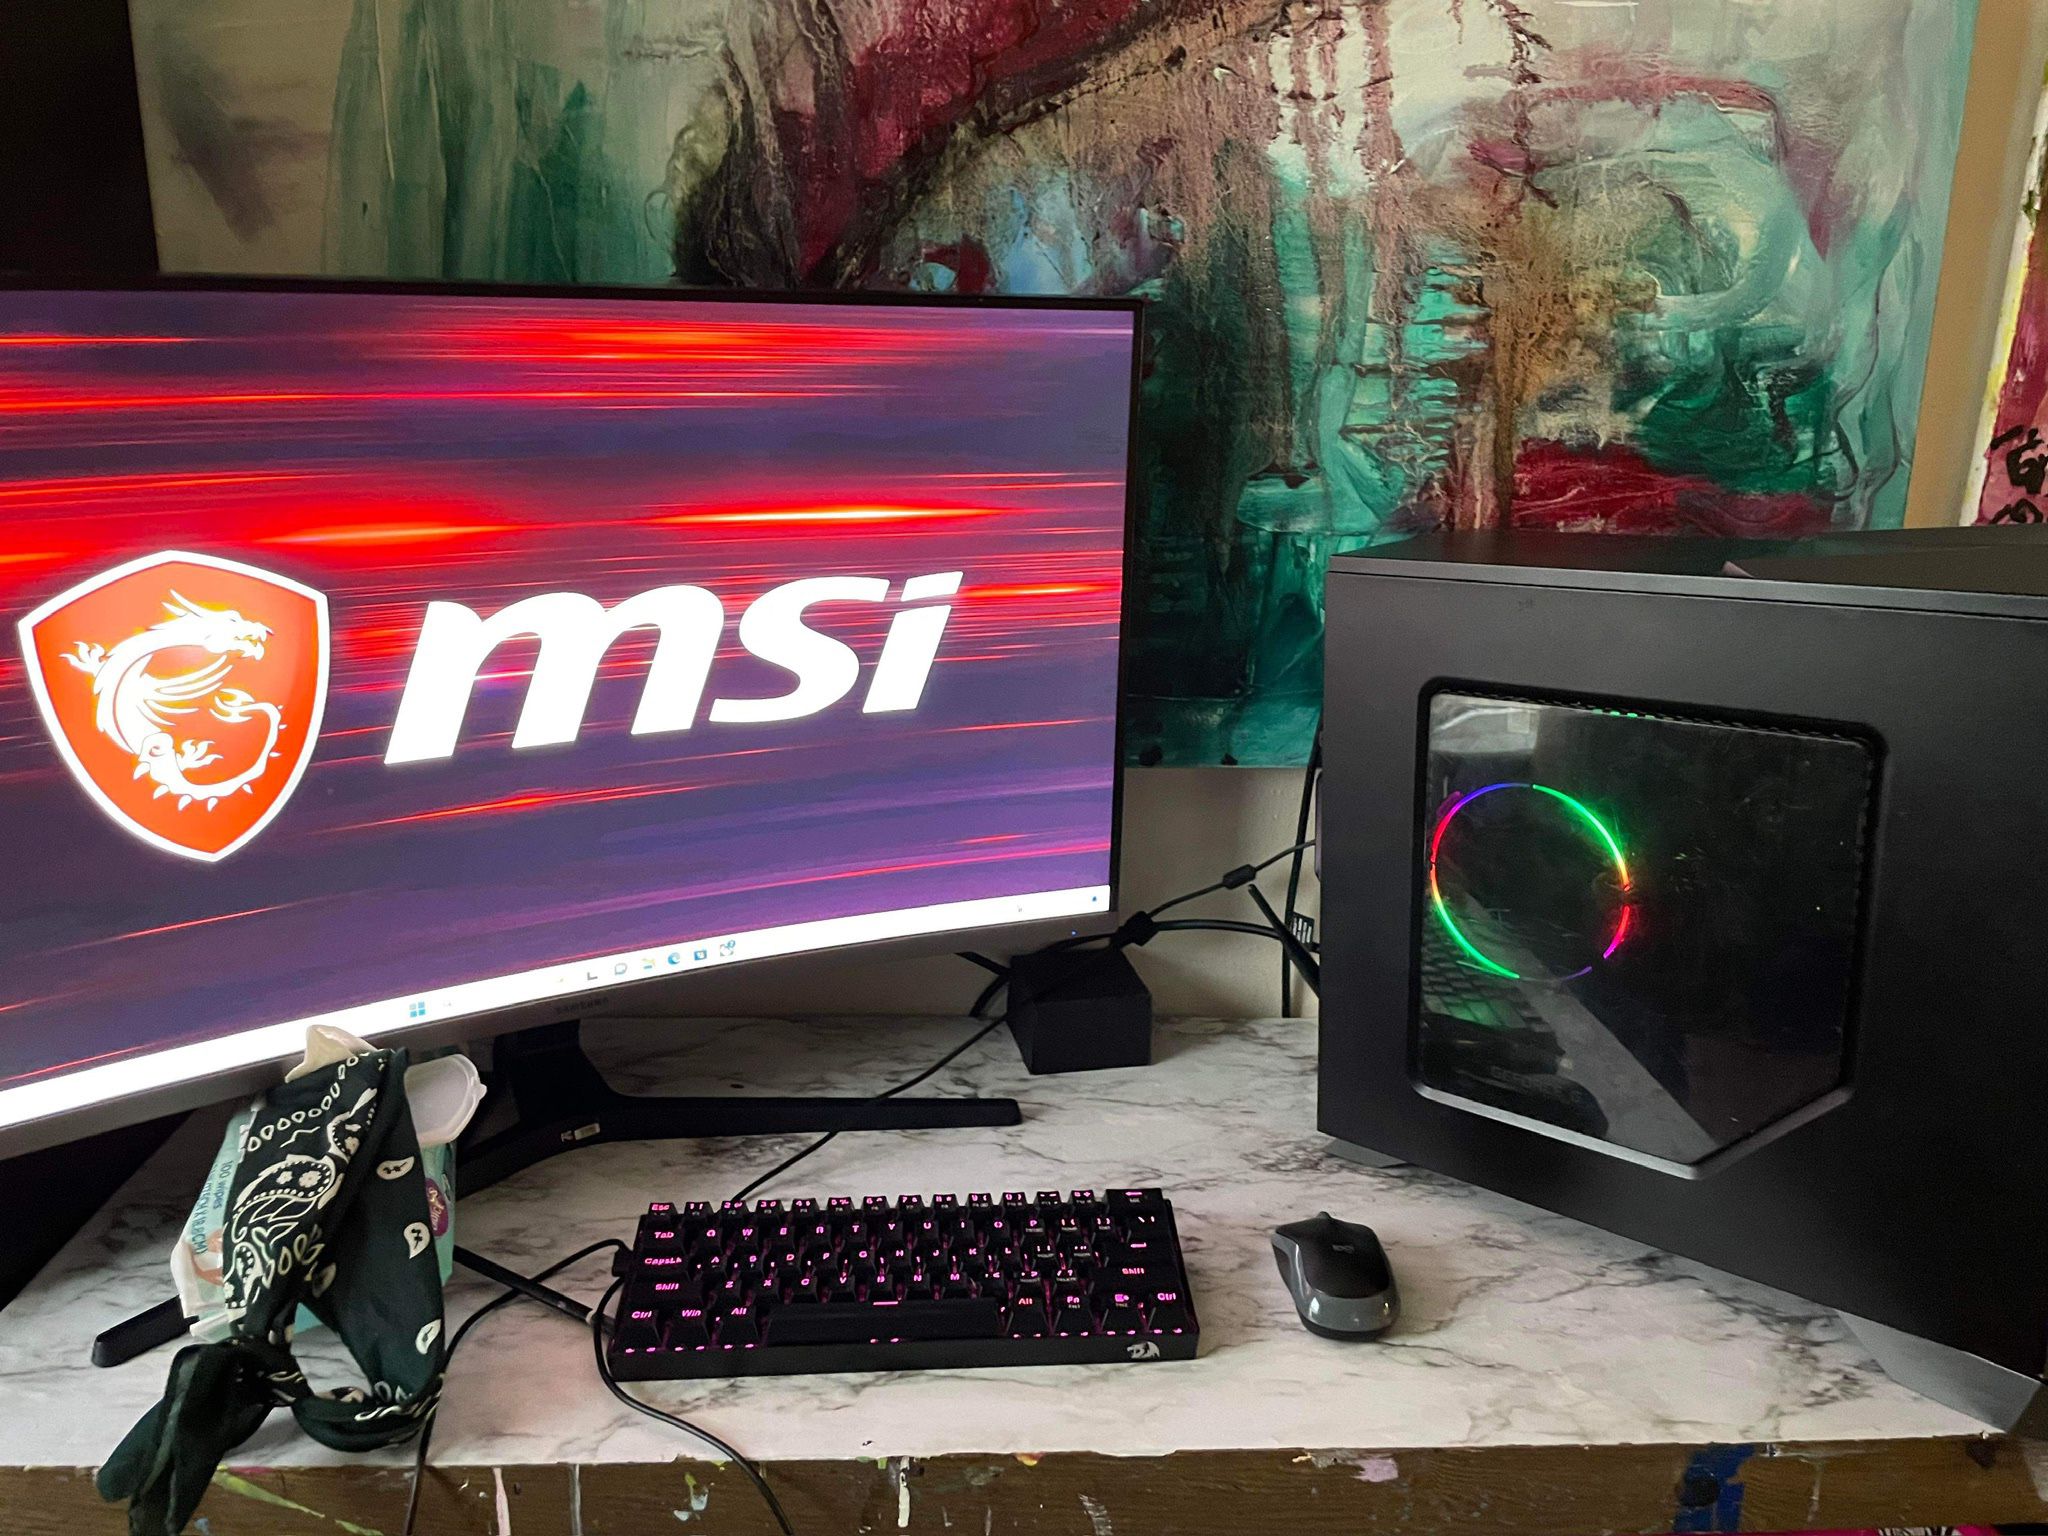 Msi Gaming Comput